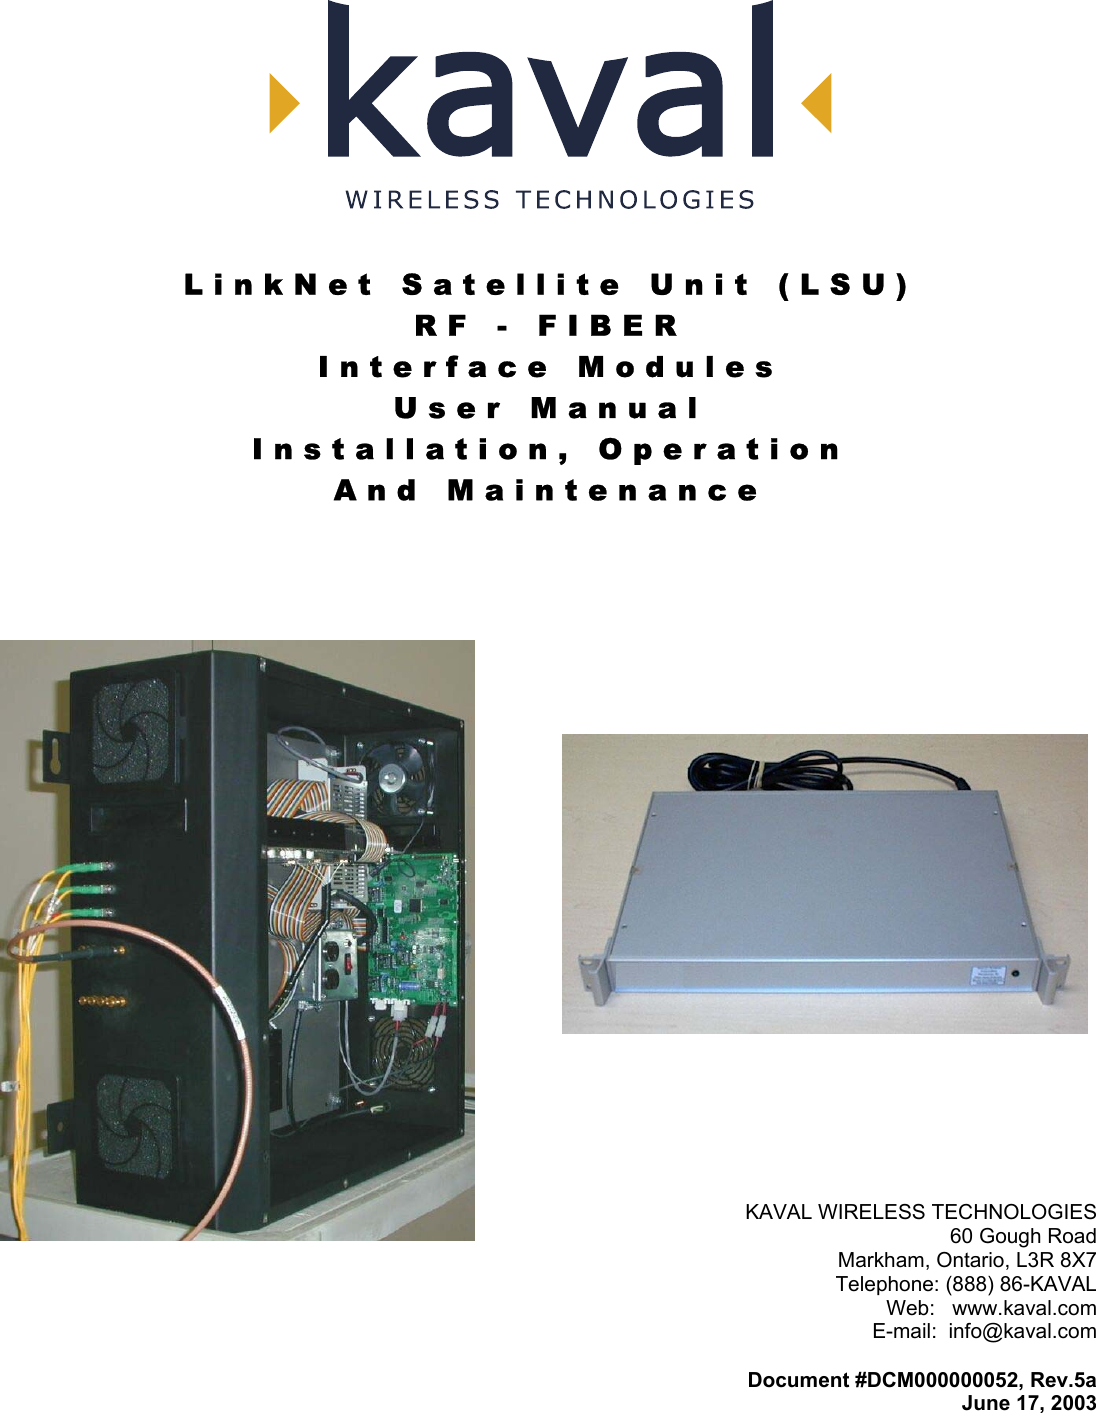   LinkNet Satellite Unit (LSU) RF - FIBER Interface Modules User Manual Installation, Operation And Maintenance    KAVAL WIRELESS TECHNOLOGIES 60 Gough Road Markham, Ontario, L3R 8X7 Telephone: (888) 86-KAVAL Web:   www.kaval.com E-mail:  info@kaval.com  Document #DCM000000052, Rev.5a June 17, 2003 